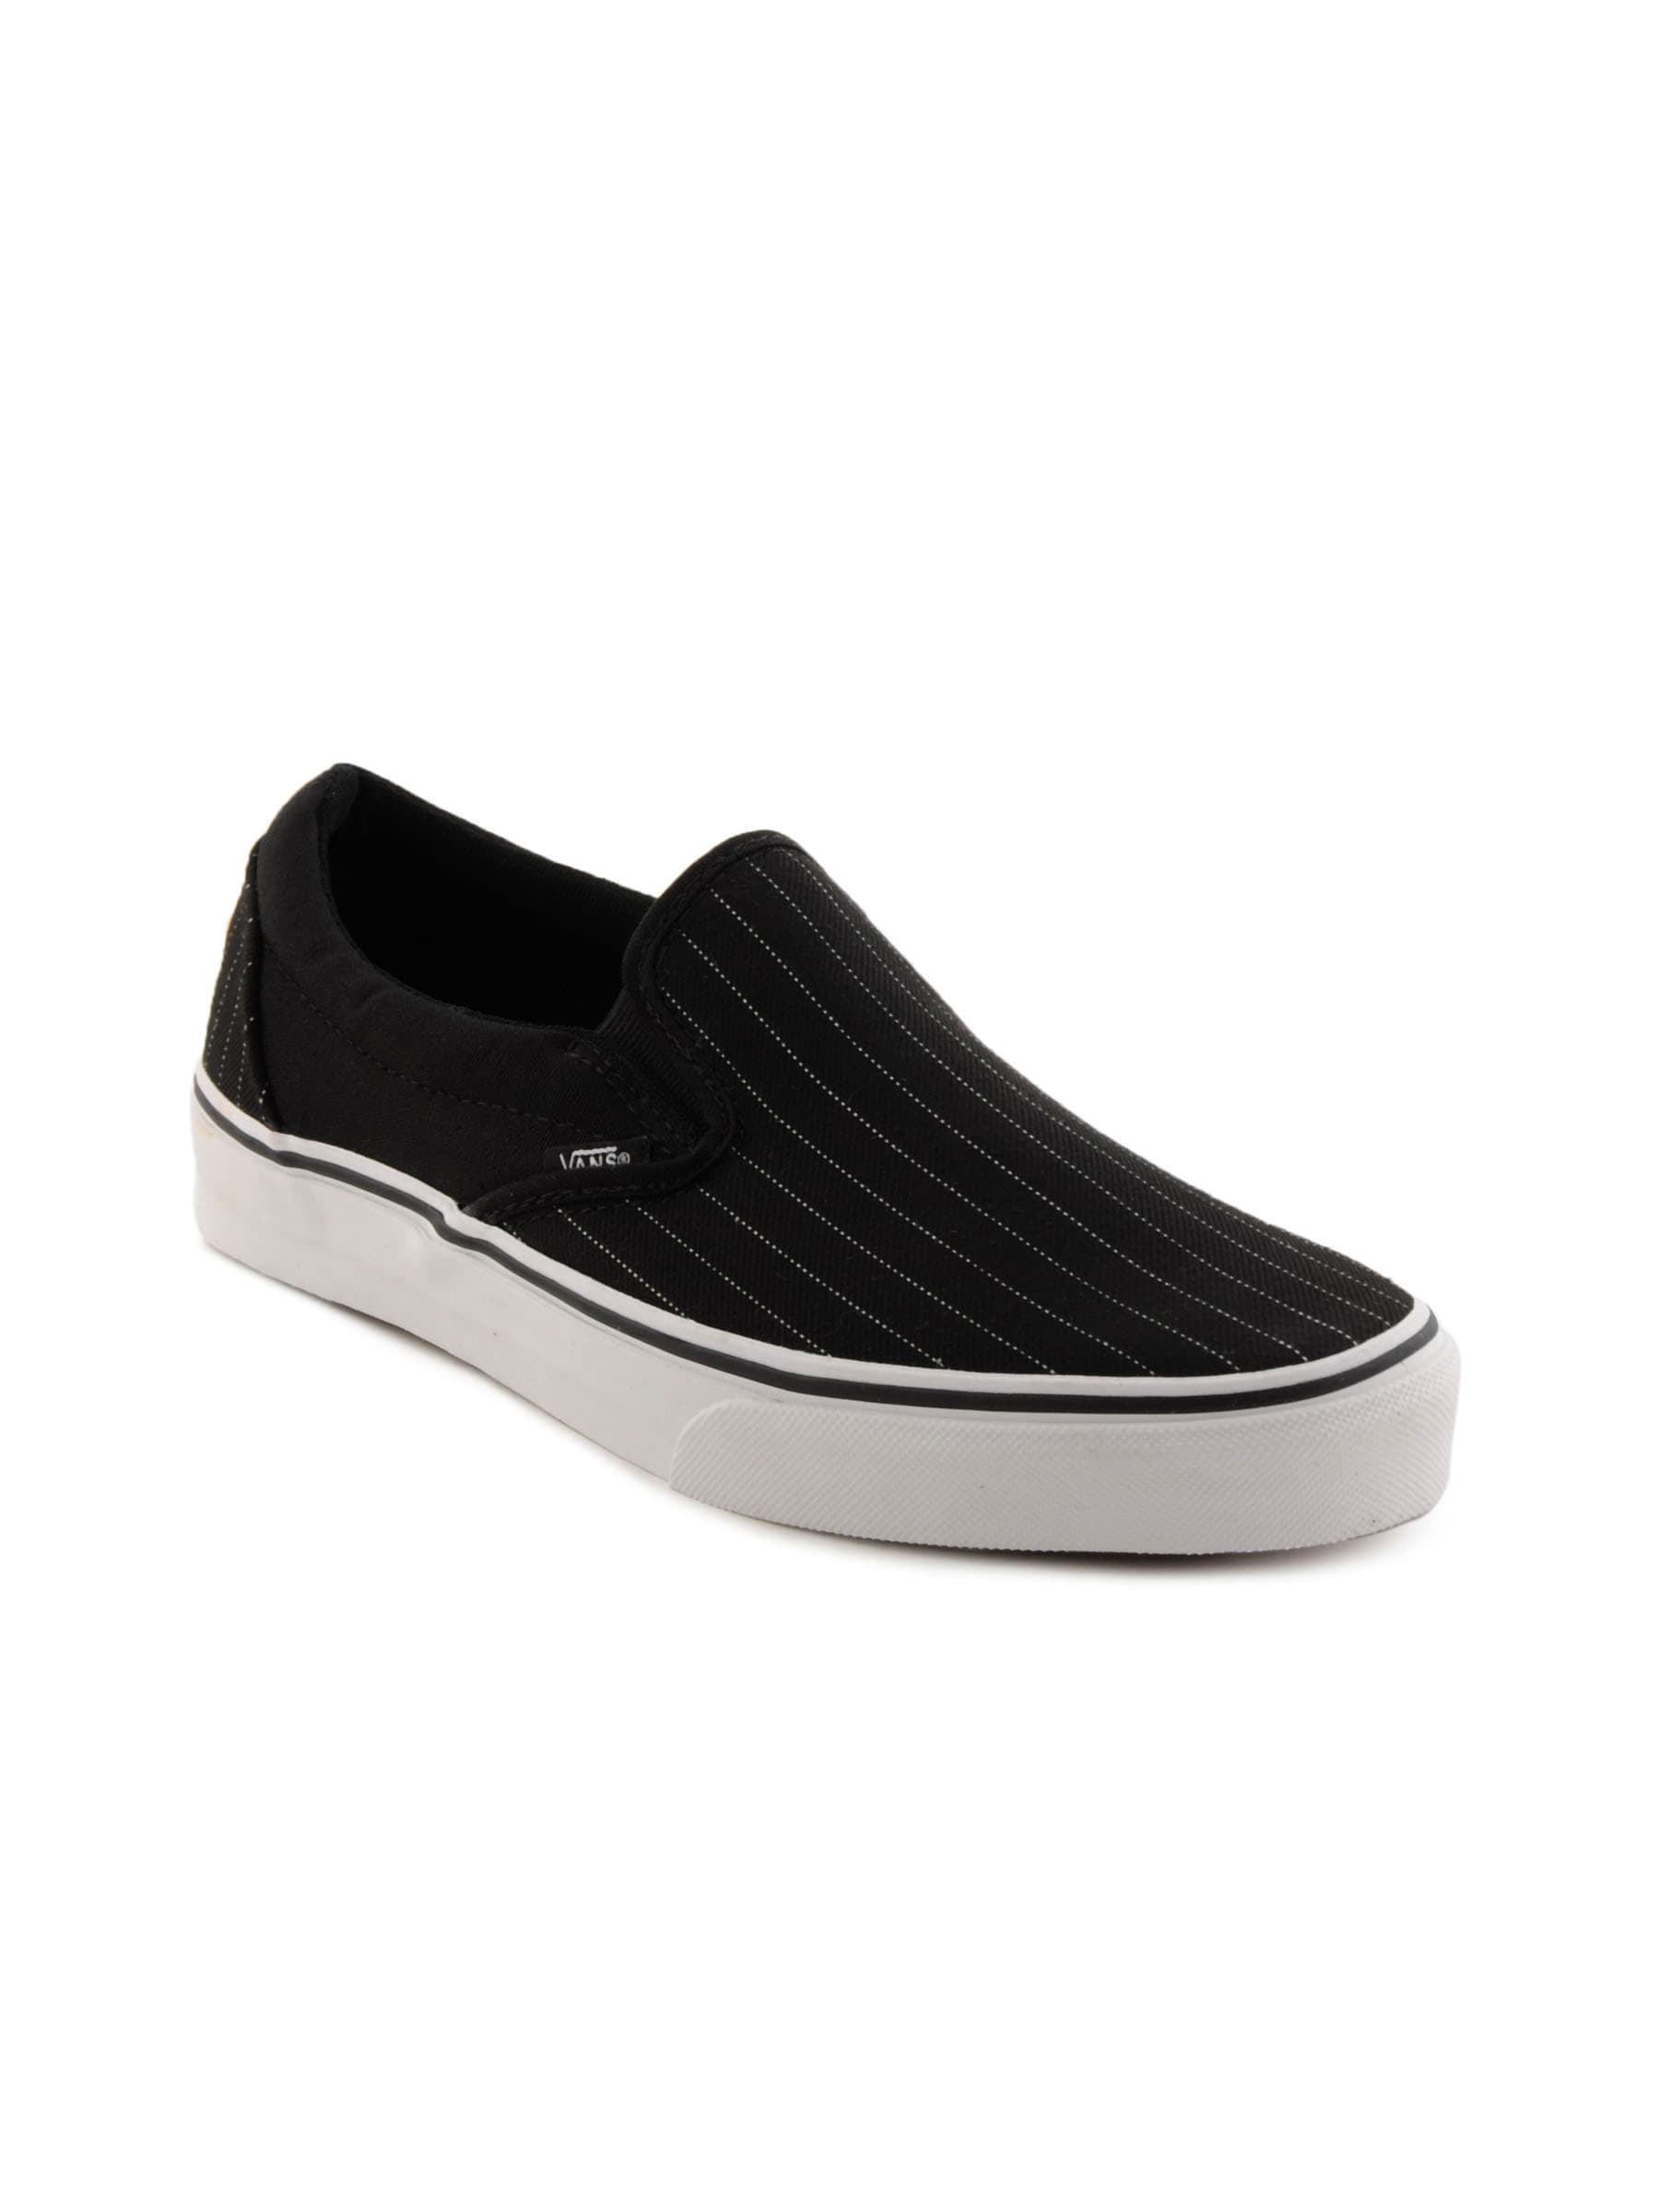 Vans Unisex Classic Slip-On Black Casual Shoes